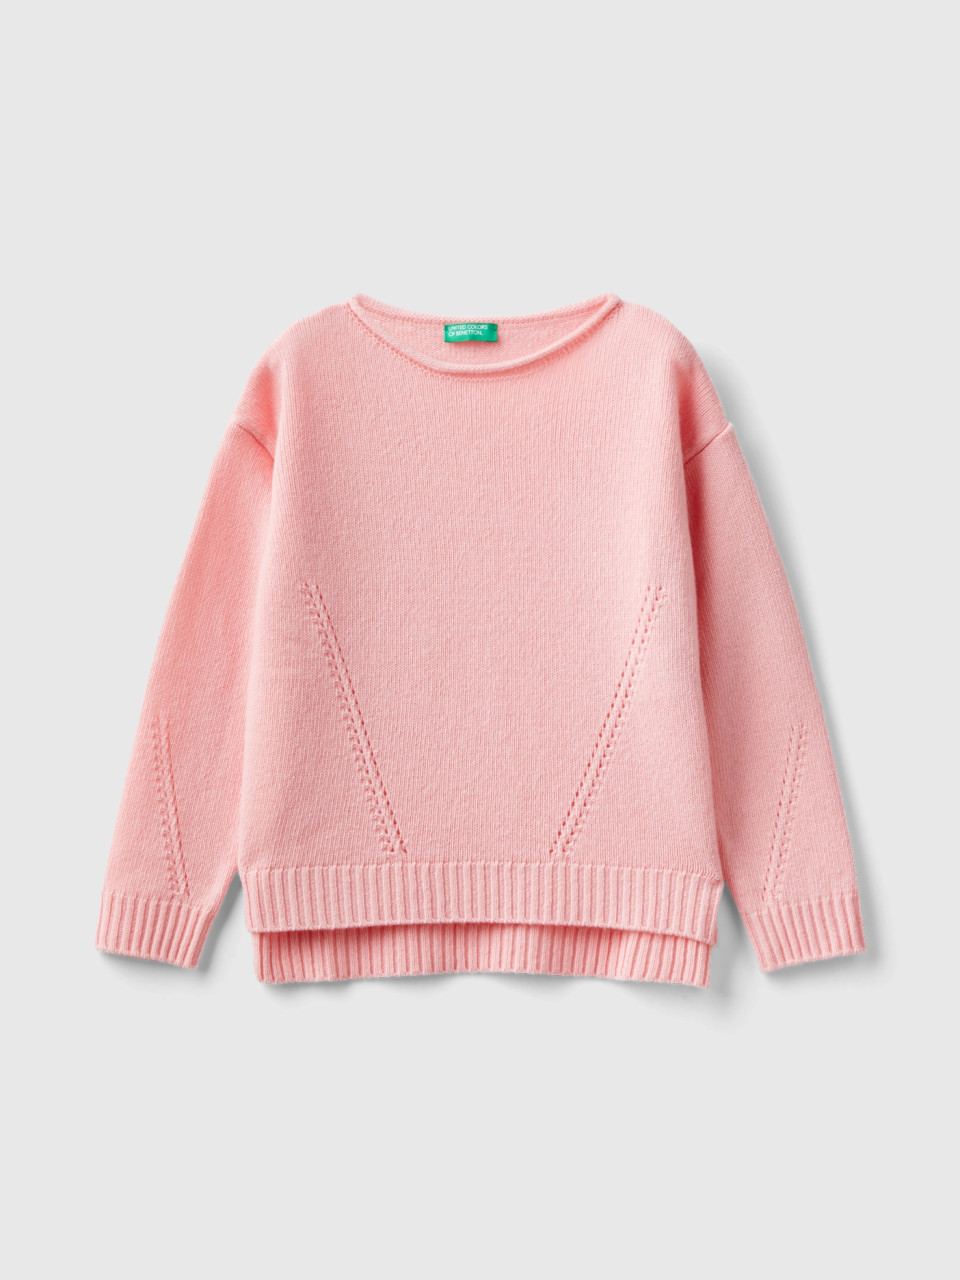 Benetton, Knit Sweater With Playful Stitching, Pink, Kids